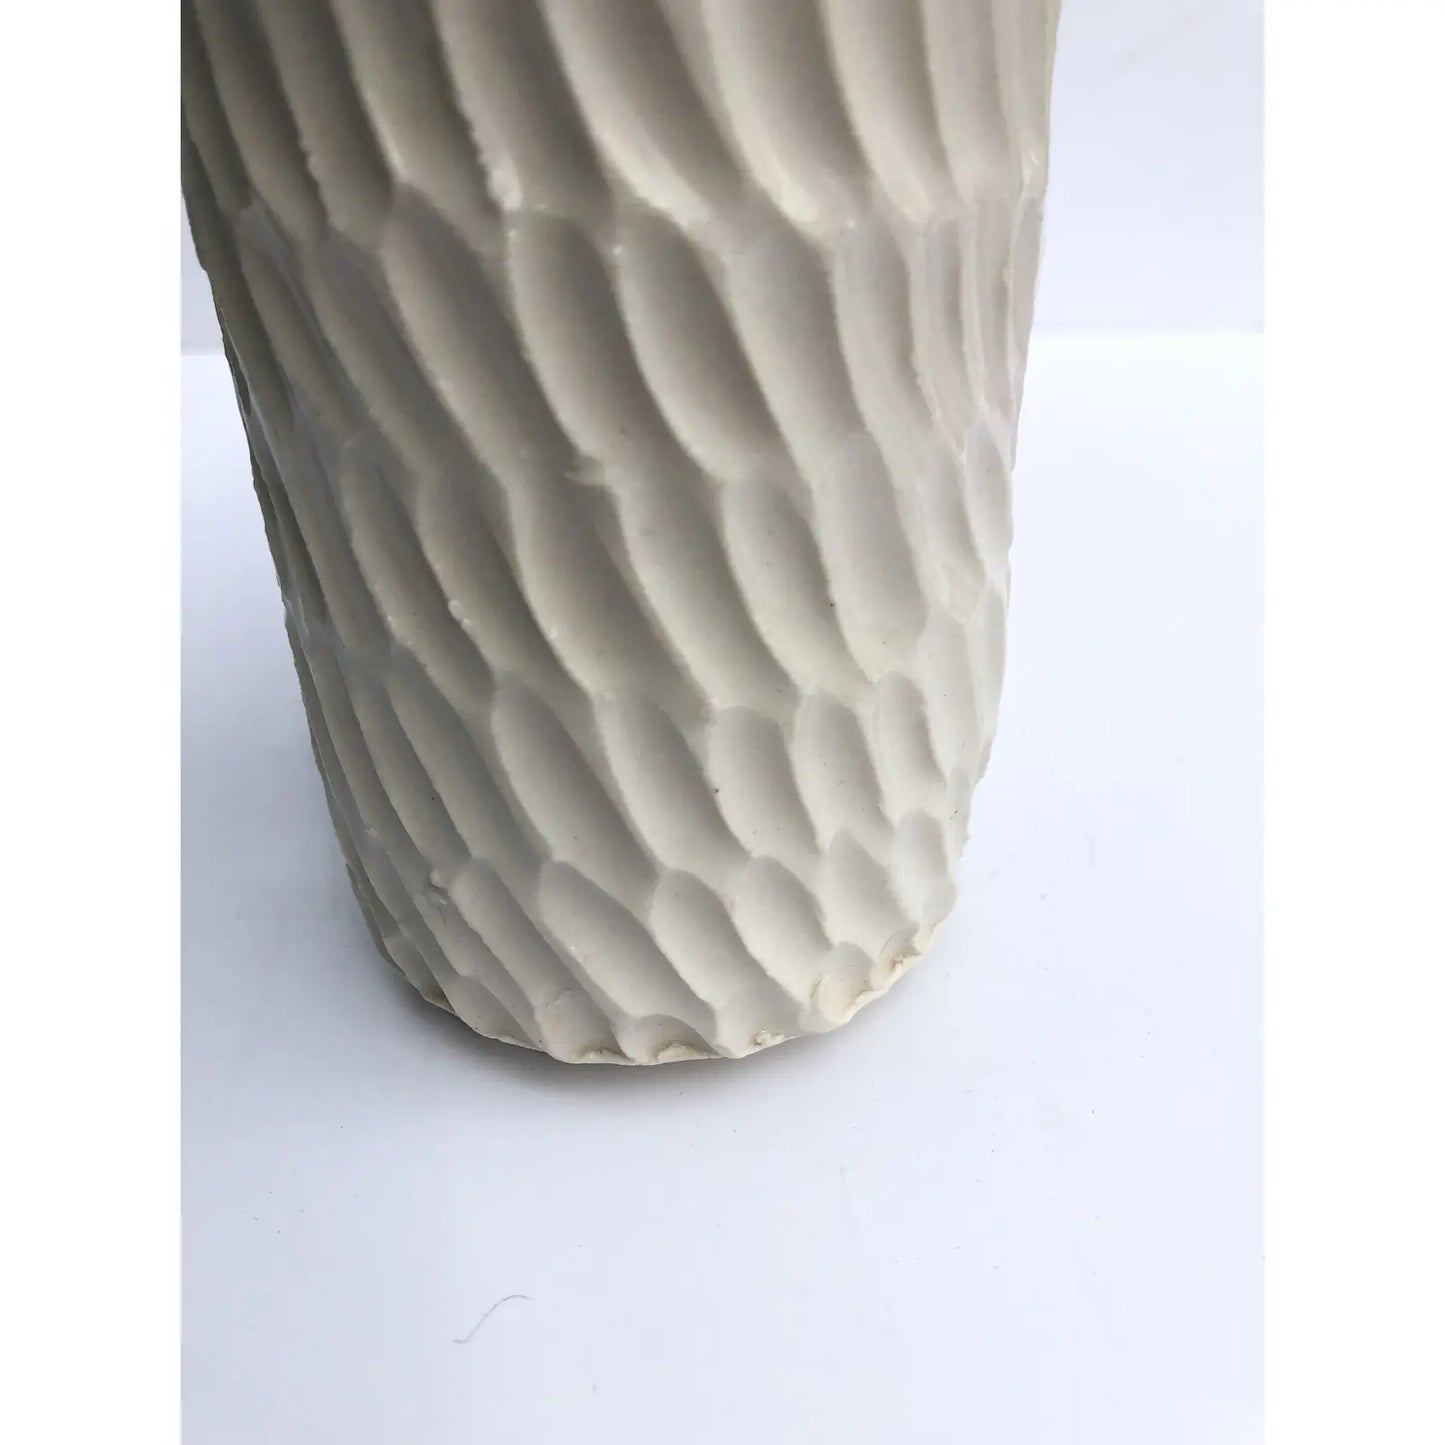 Vintage Mid 20th Century Boho Ceramic Artist Made Holding Sculptural Vase